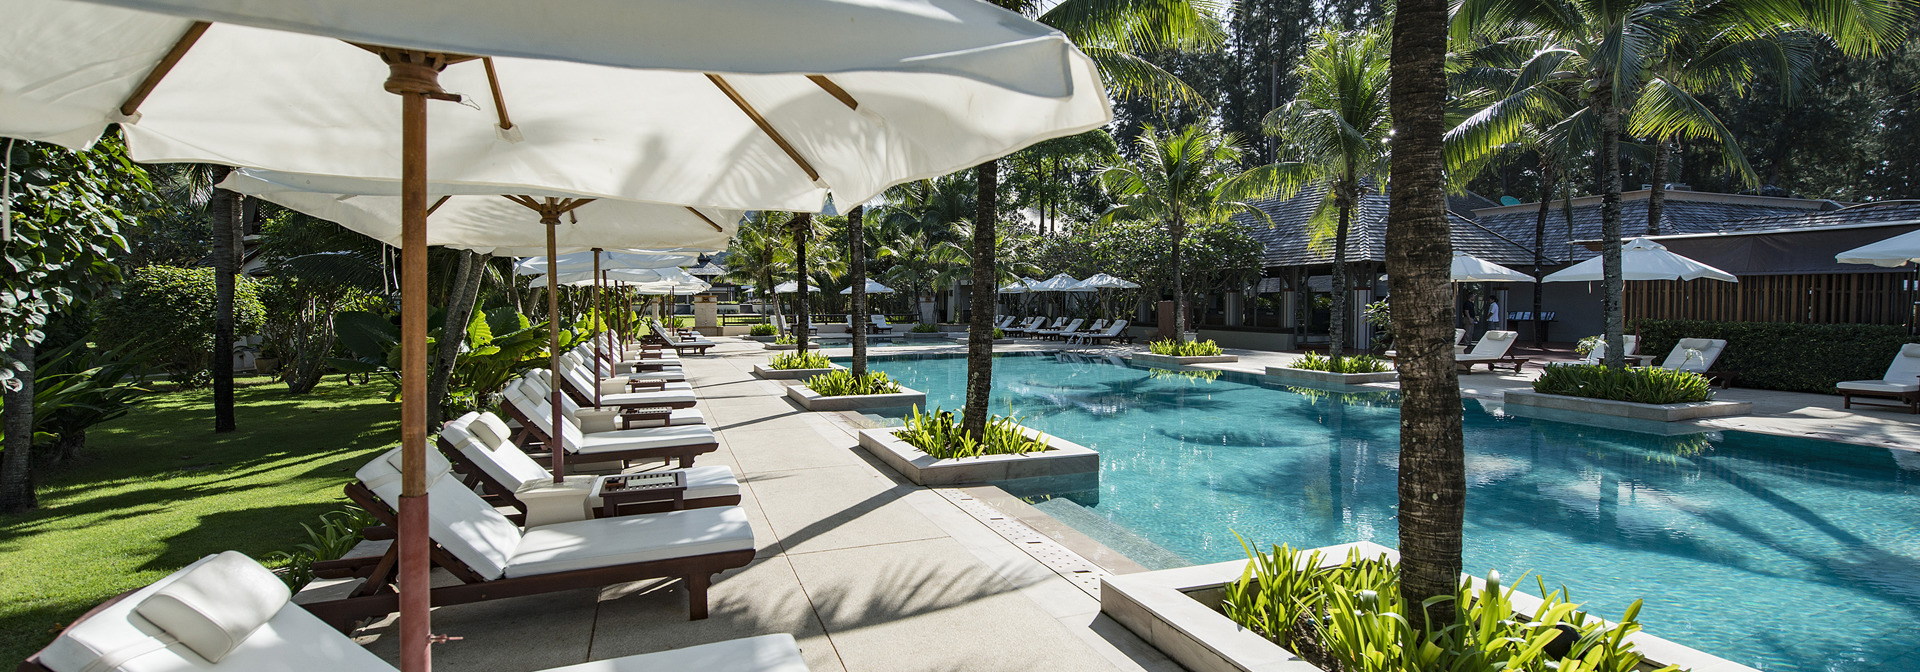 thailand - layana resort_pool_05